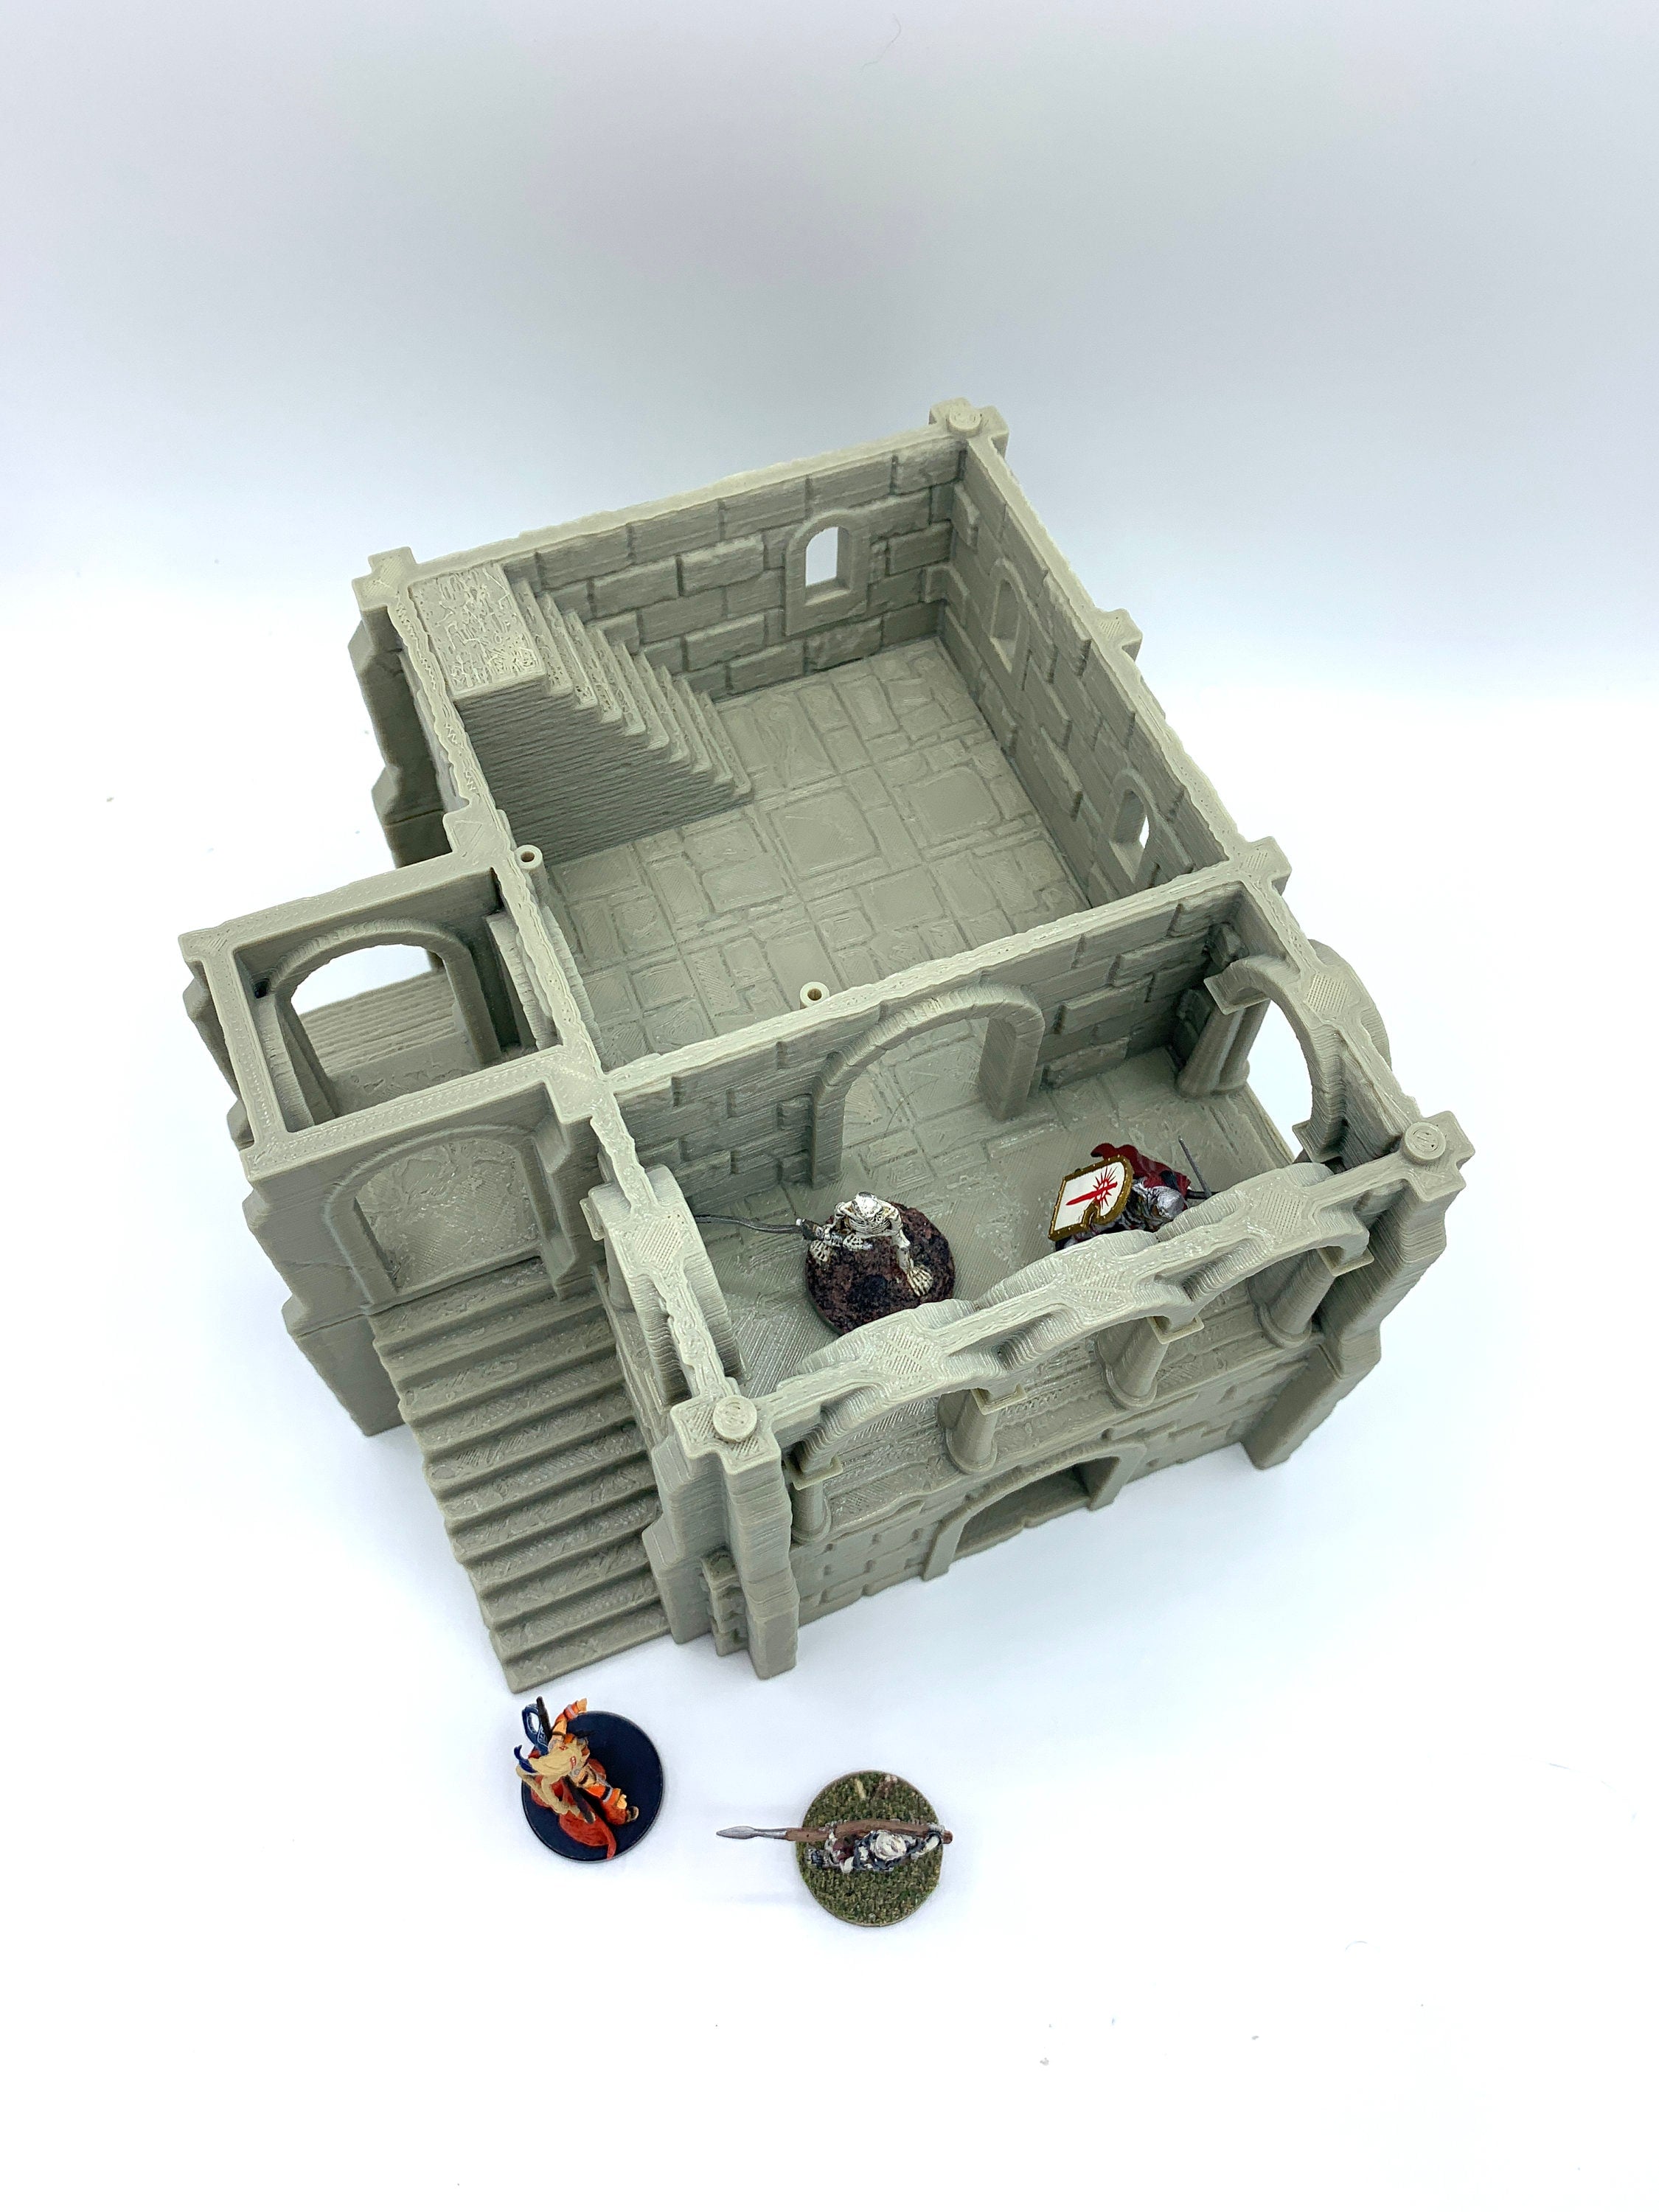 Arkenfel House 5 / Dark Realms Terrain / RPG and Wargame 3d Printed Tabletop Terrain / Licensed Printer